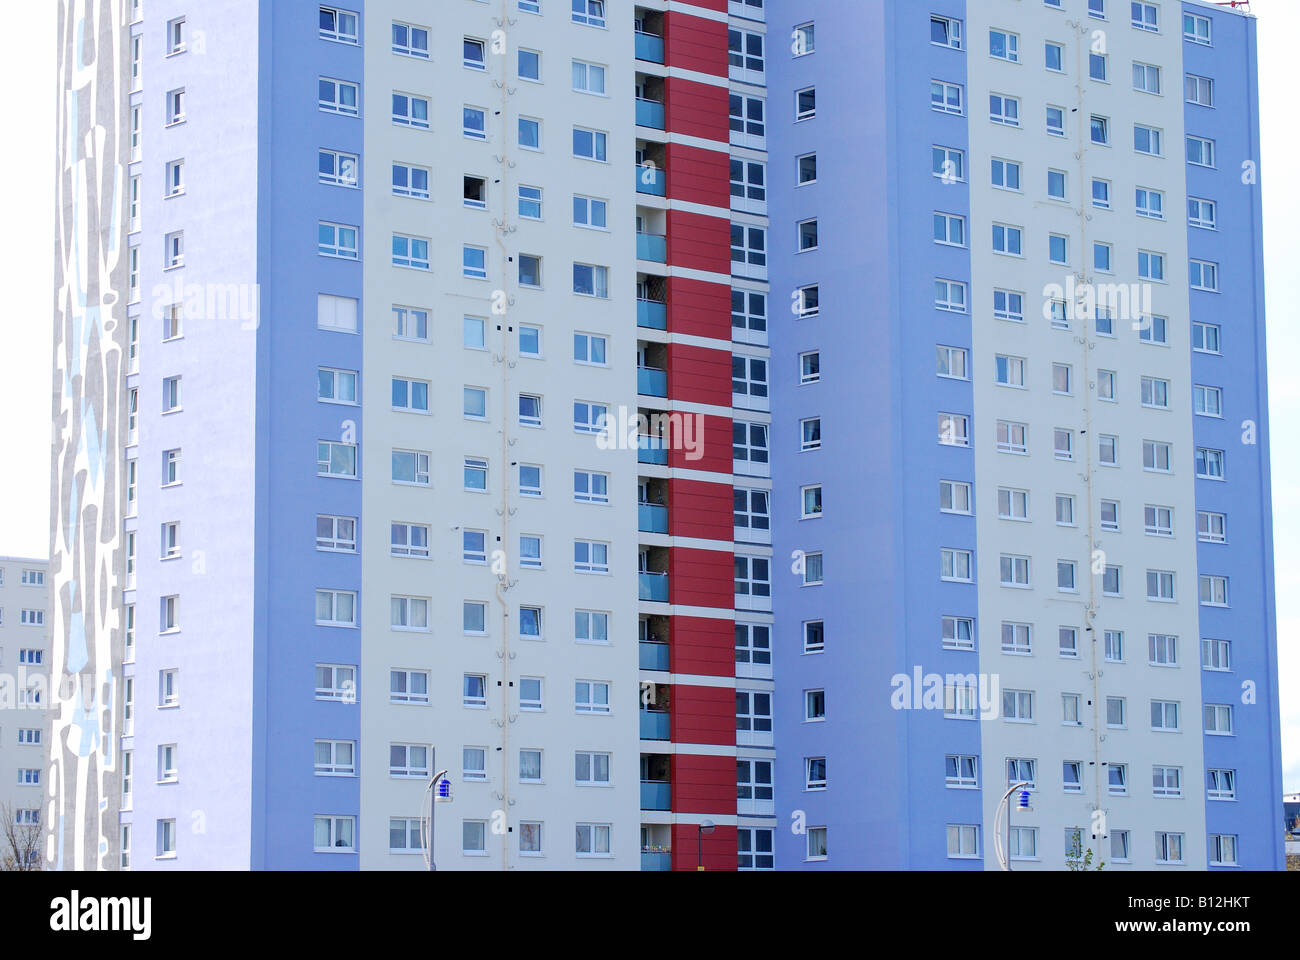 Residential high-rise flats, Waterfront, Gosport, Hampshire, England, United Kingdom Stock Photo